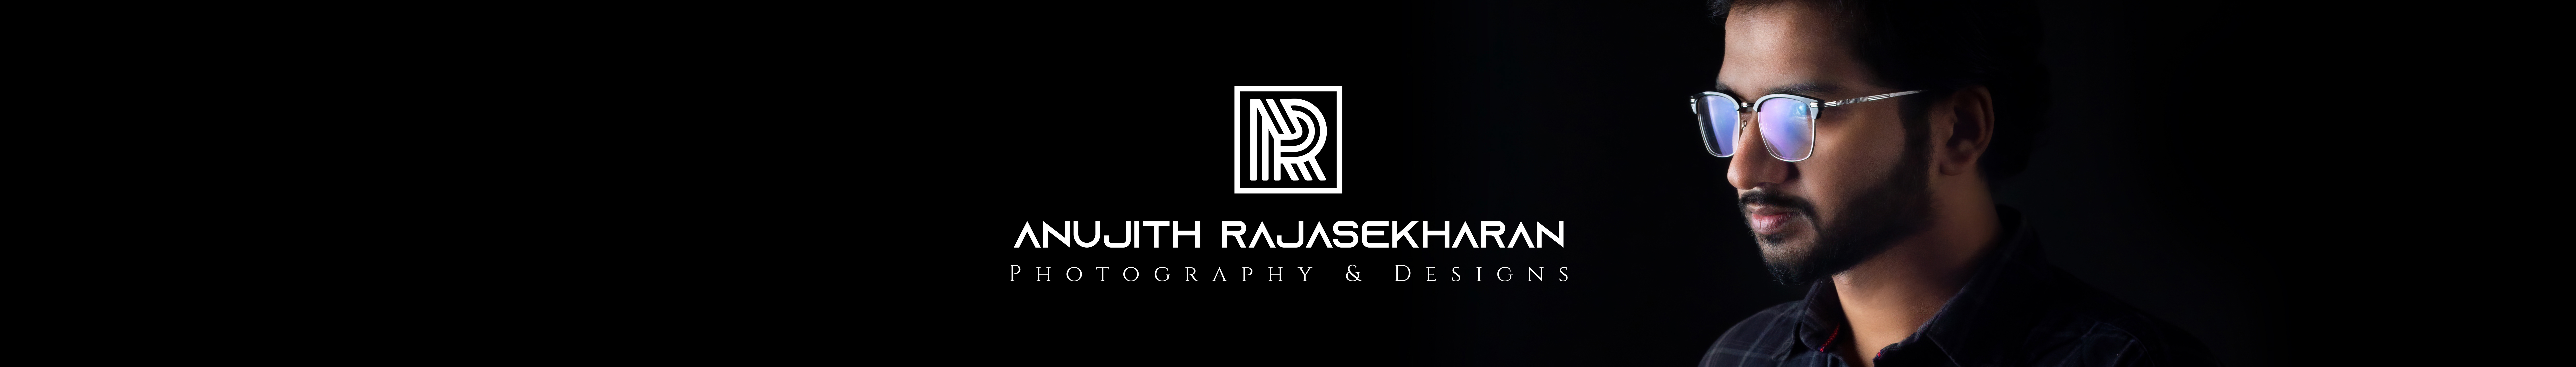 Anujith Rajasekharan's profile banner